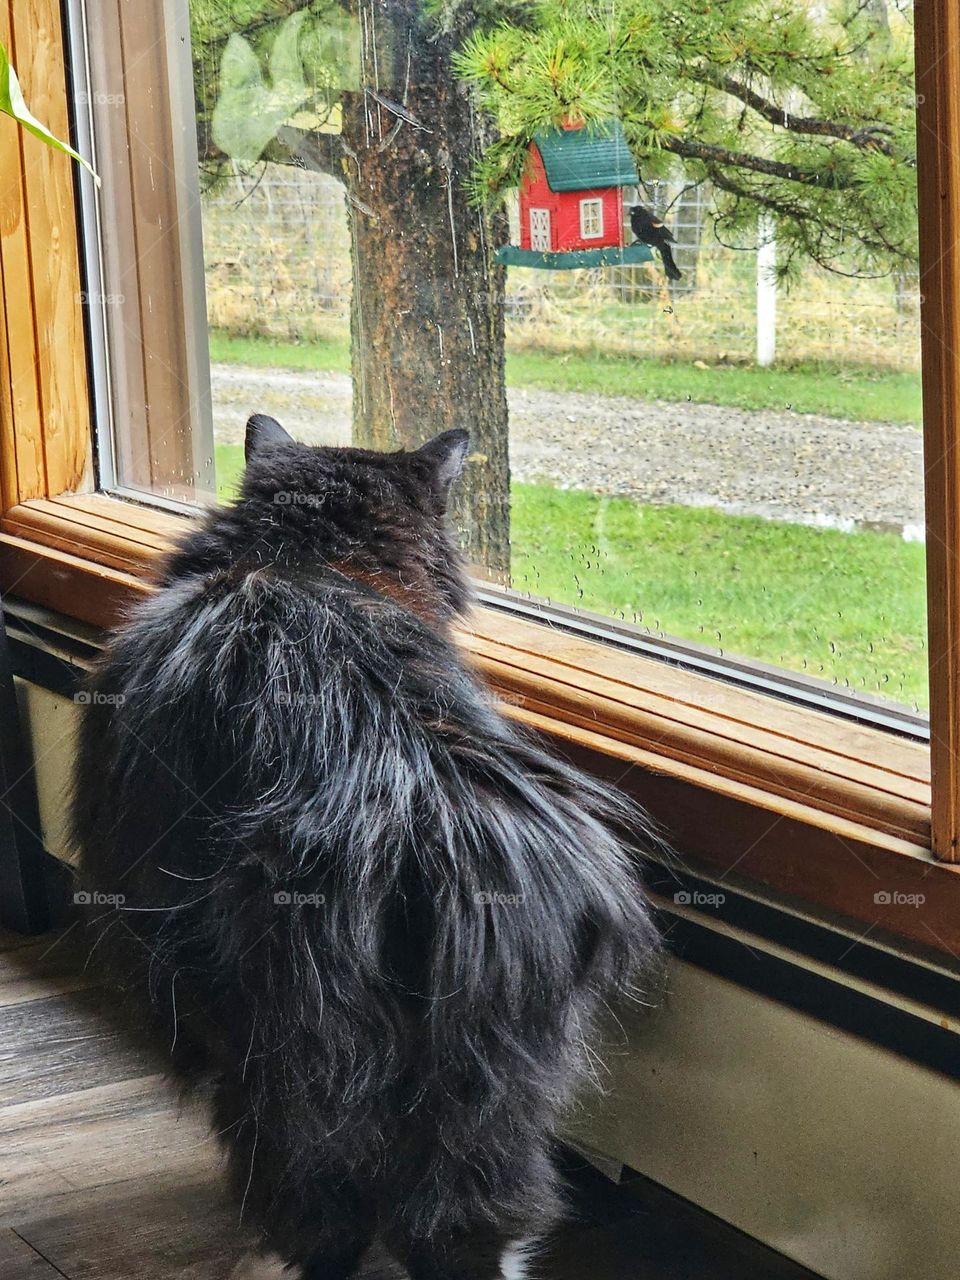 Feline stalking her prey through the window